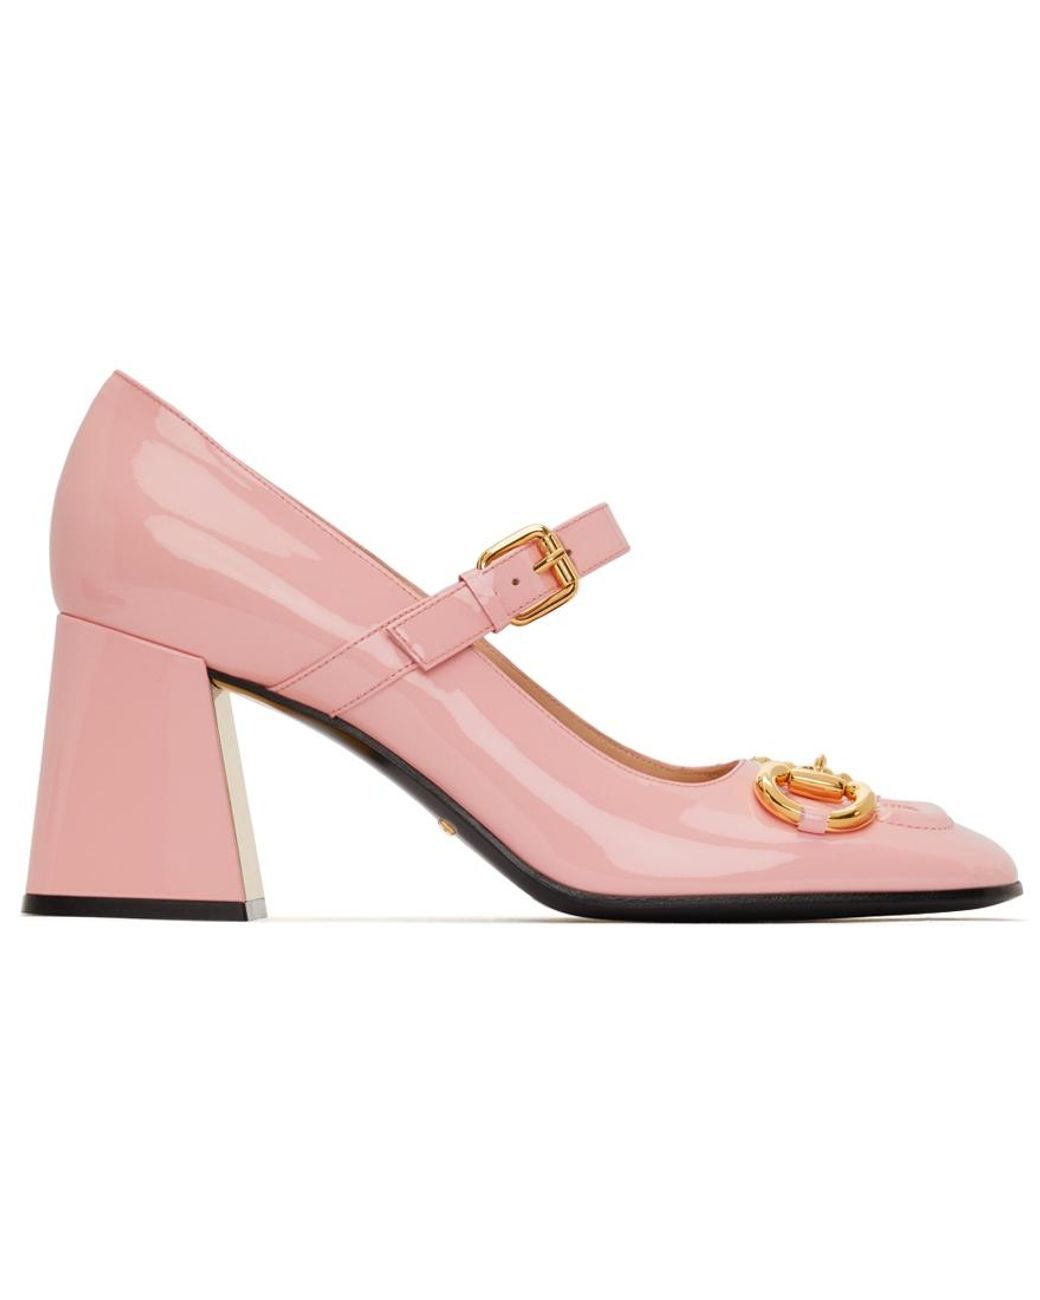 Gucci Horsebit Mary-jane Heels in Pink | Lyst